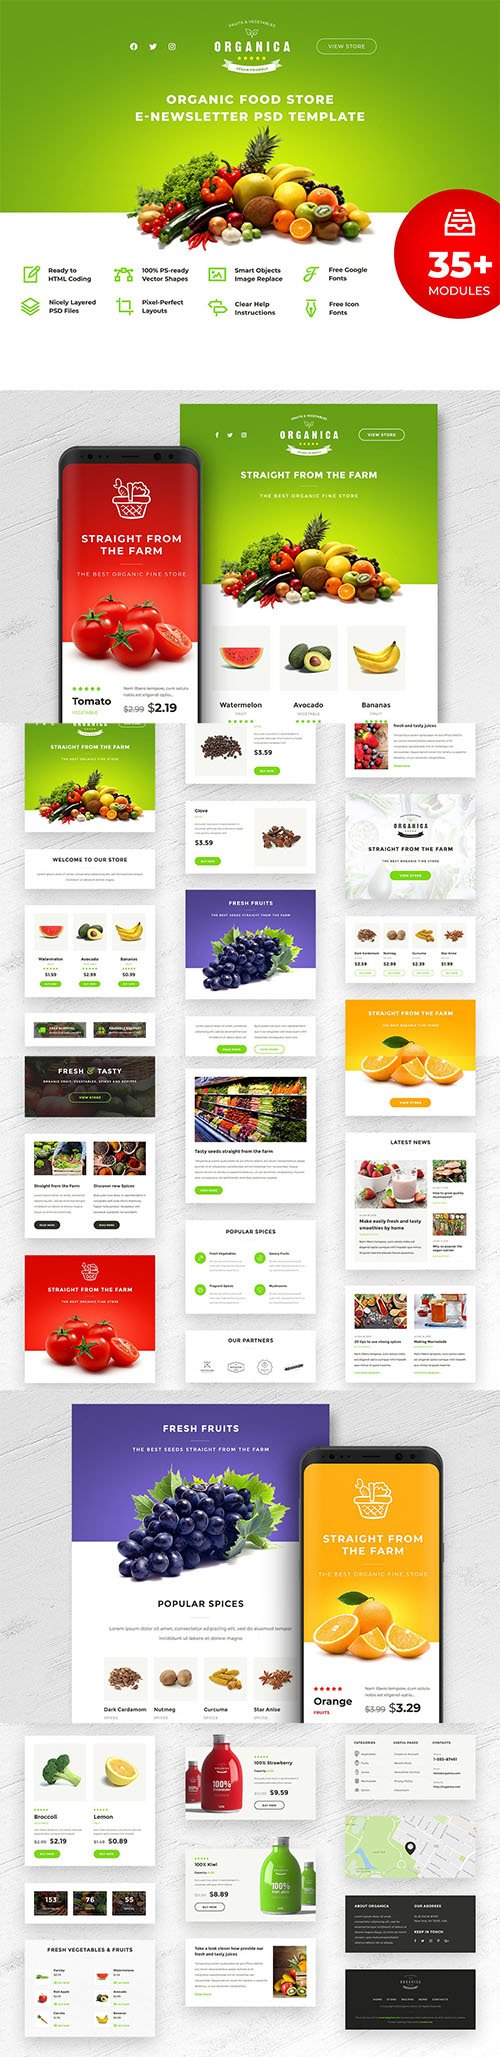 Organica - Food Store E-newsletter PSD Template